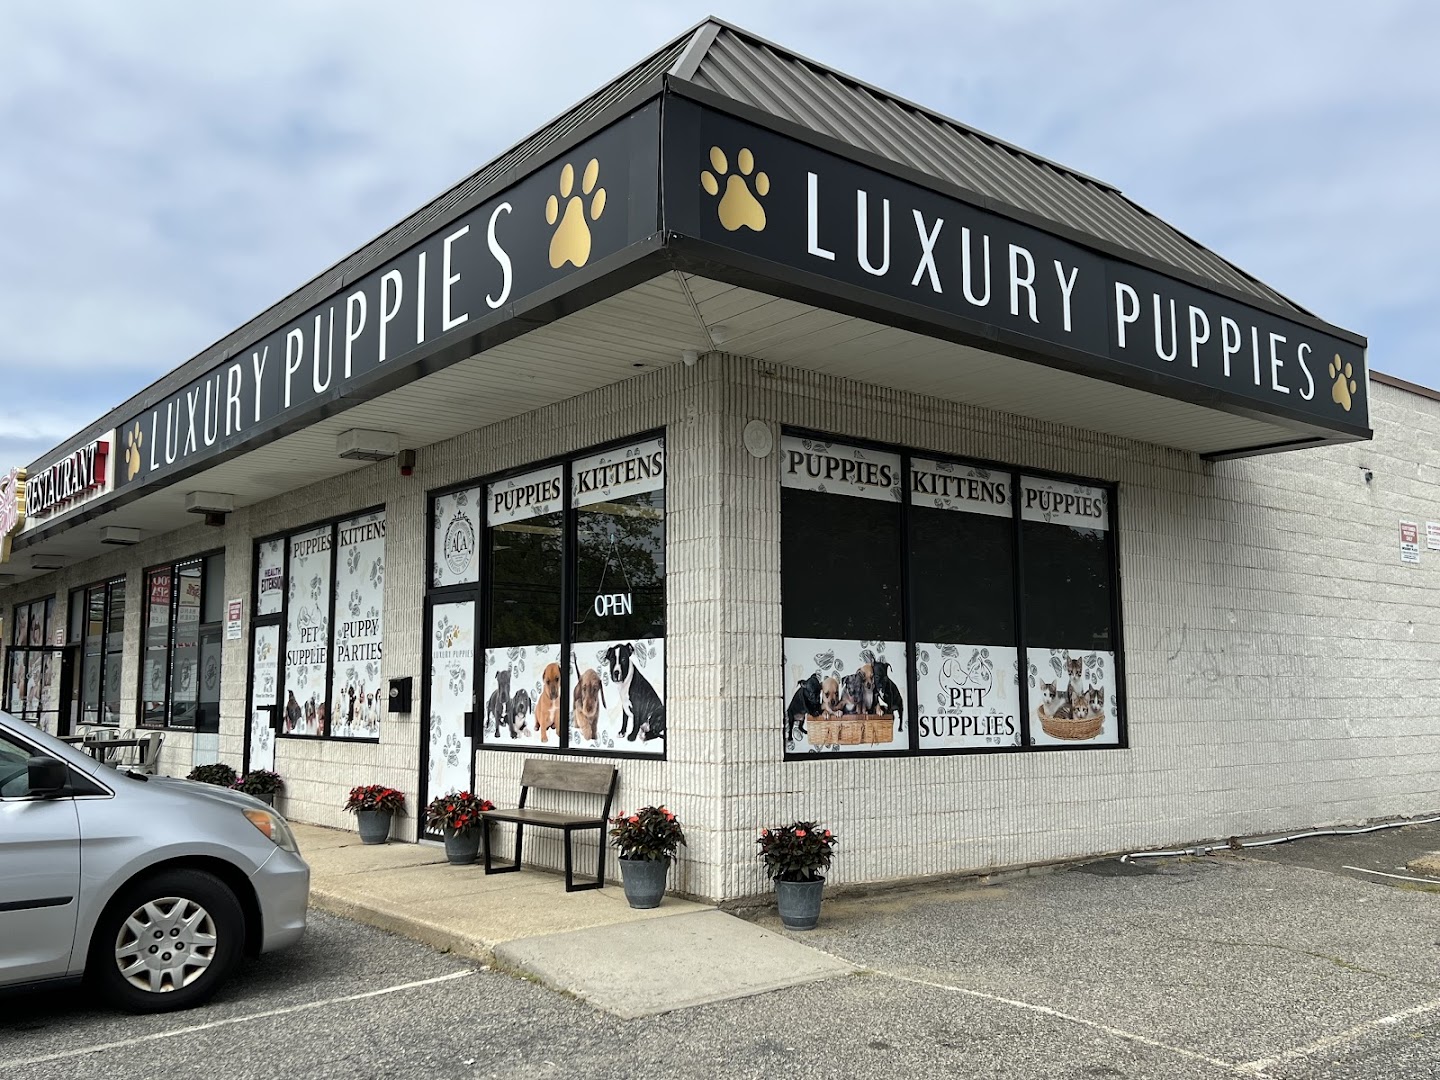 Luxury Puppies